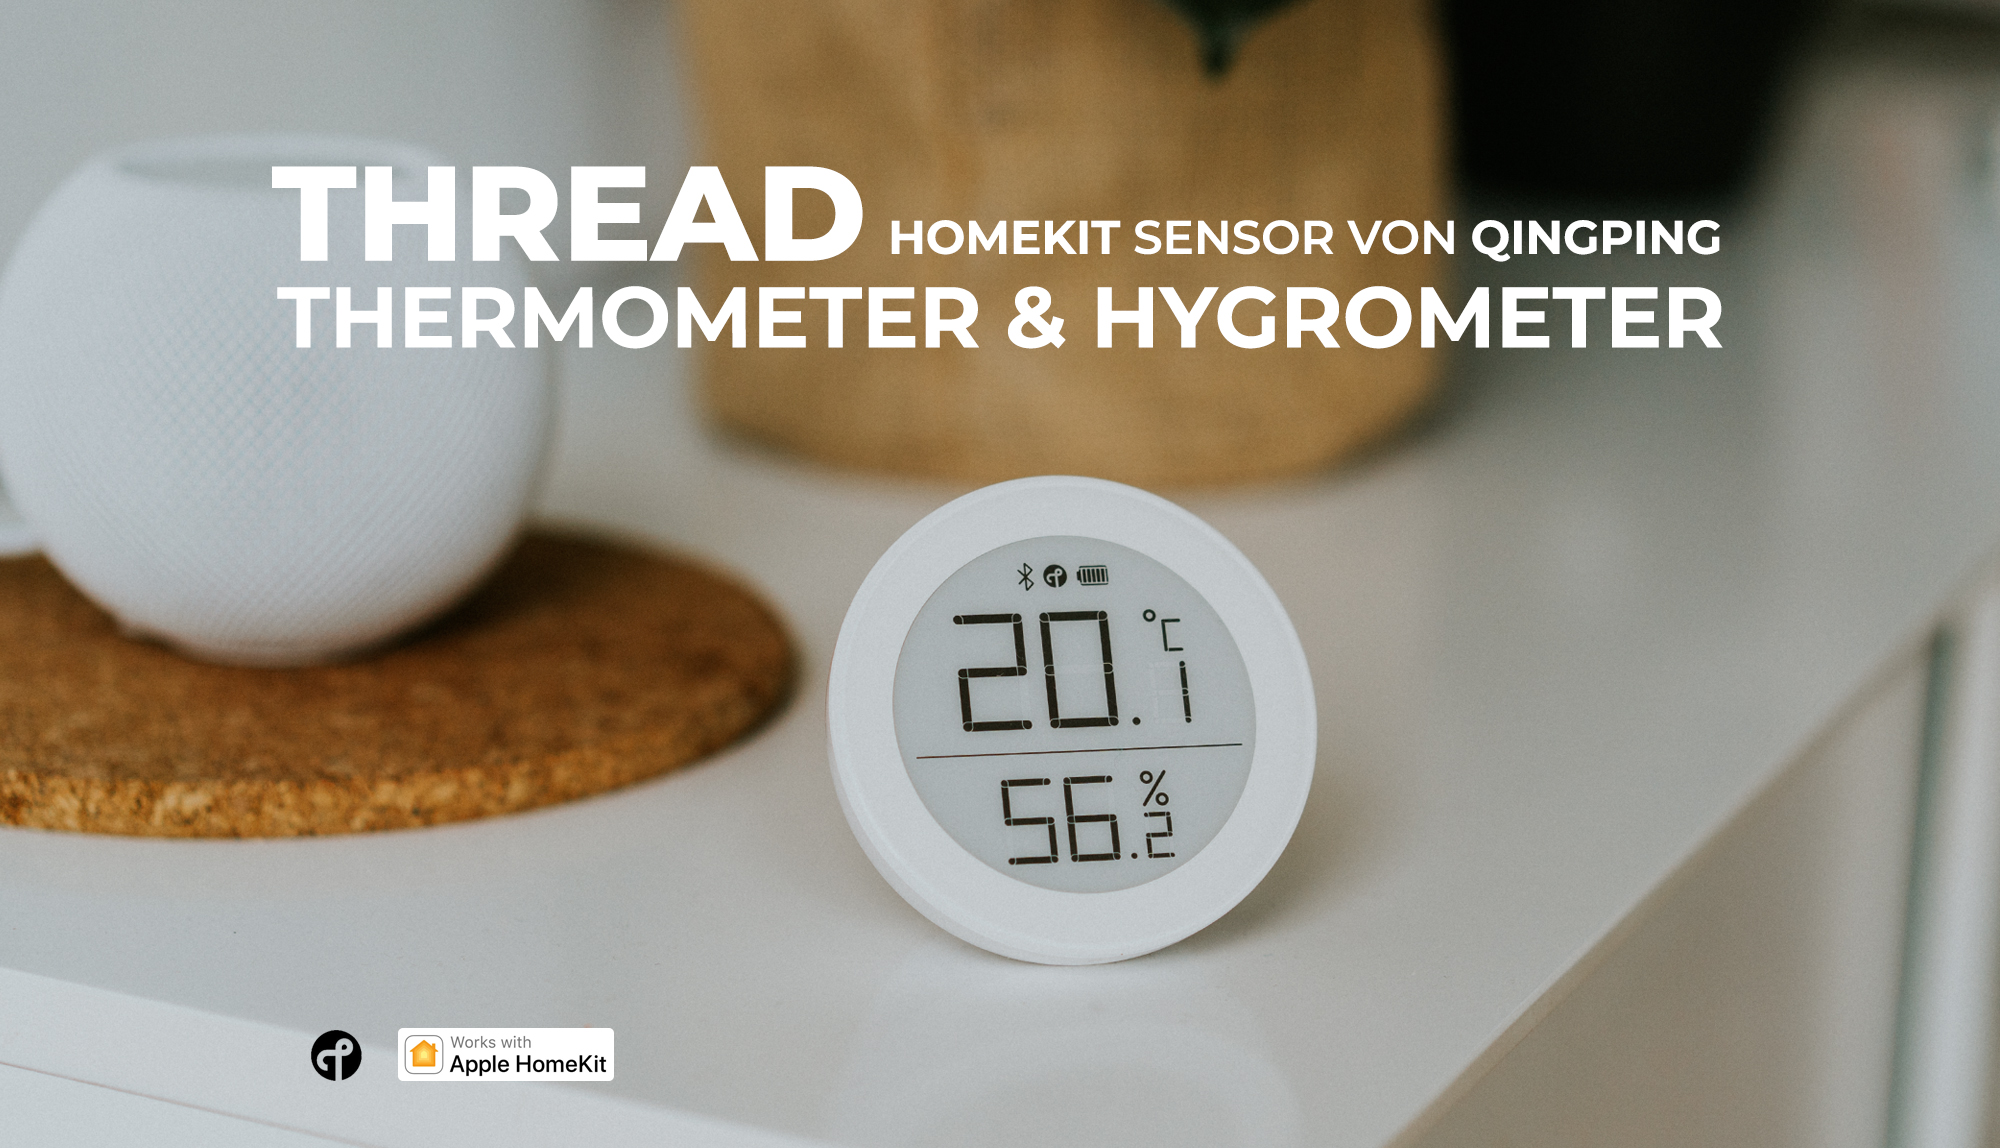 Jetzt mit Thread - Qingping Homekit Thermometer & Hygrometer